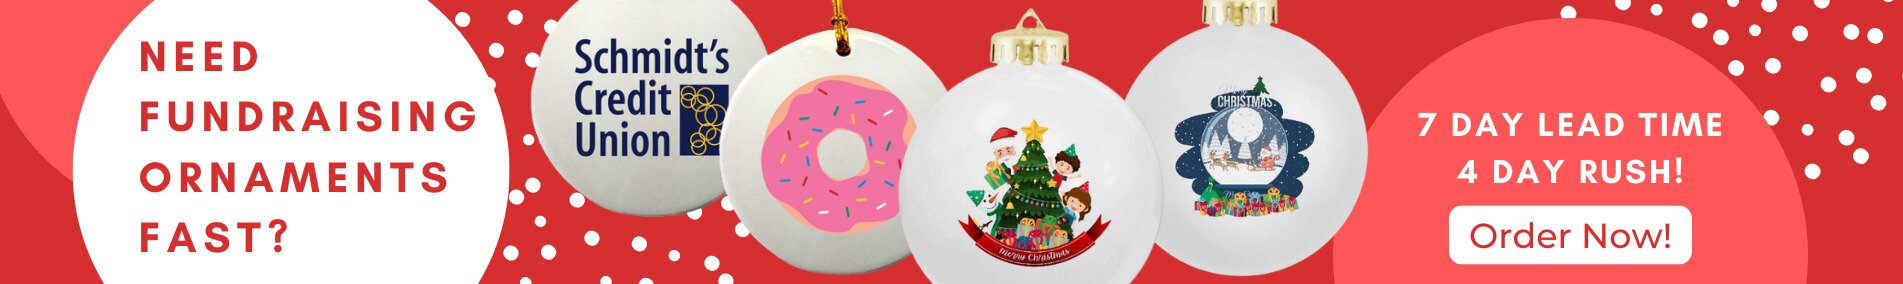 custom fundraiser ornaments